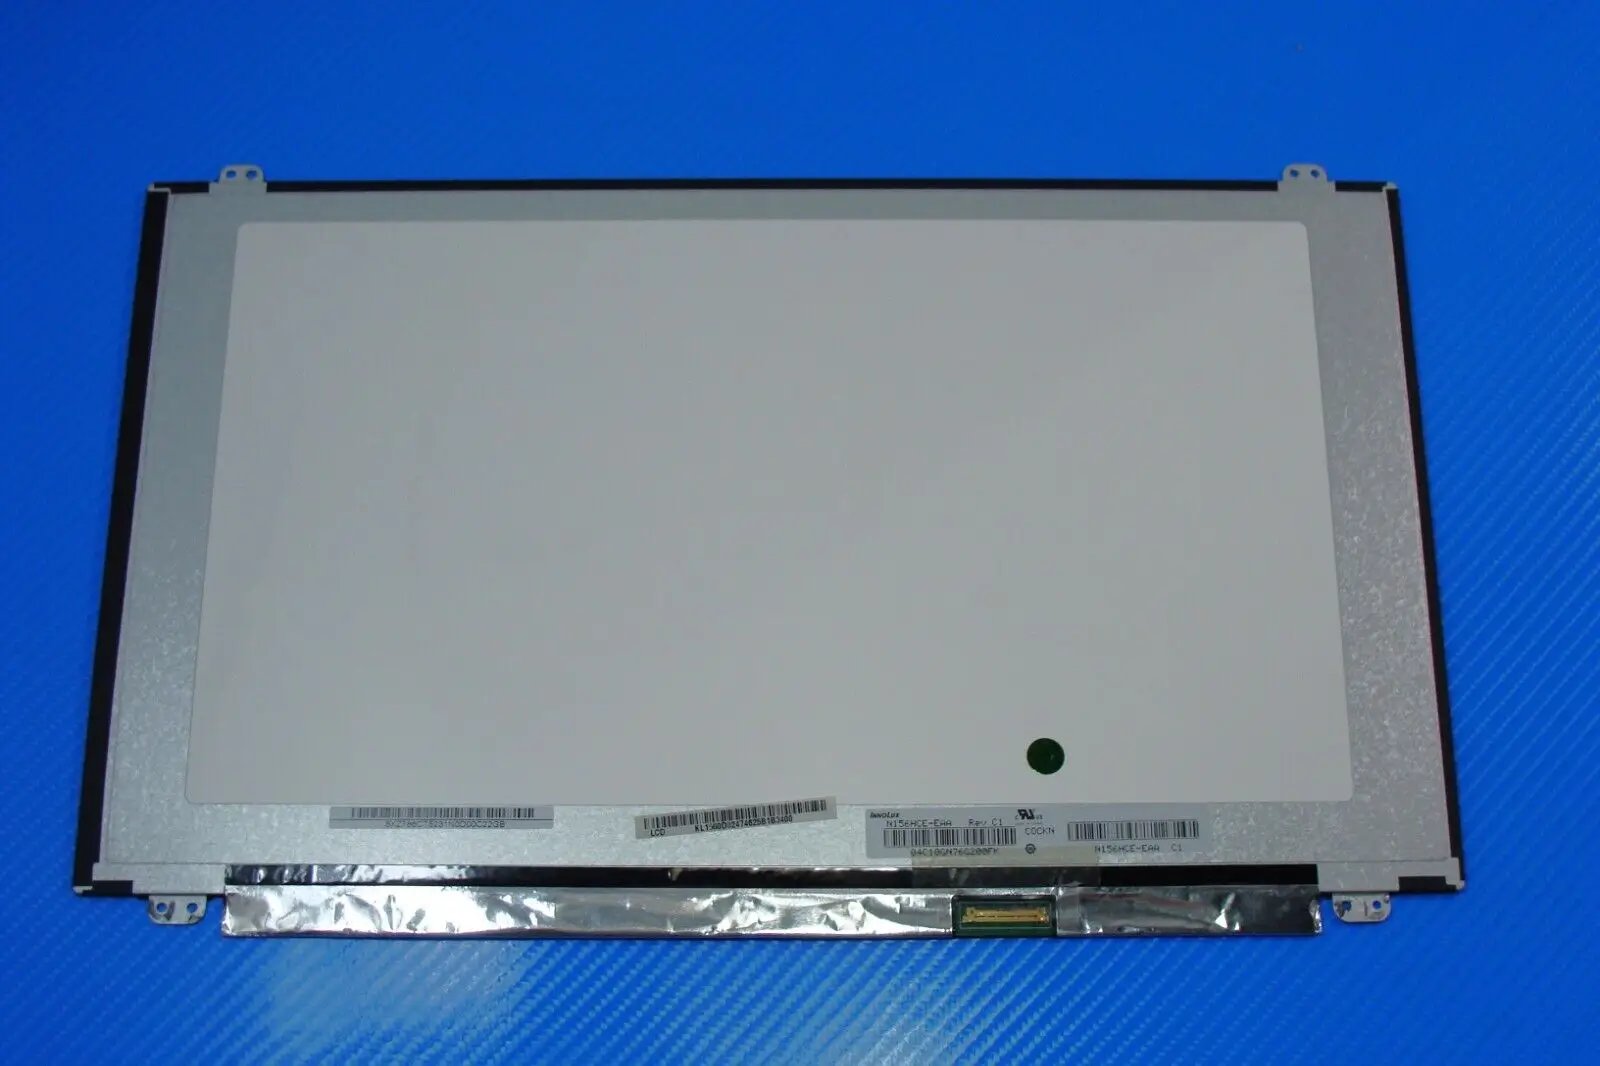 Acer Predator Helios 300 15.6” G3-571-77QK InnoLux LCD Screen N156HCE-EAA Rev.C1